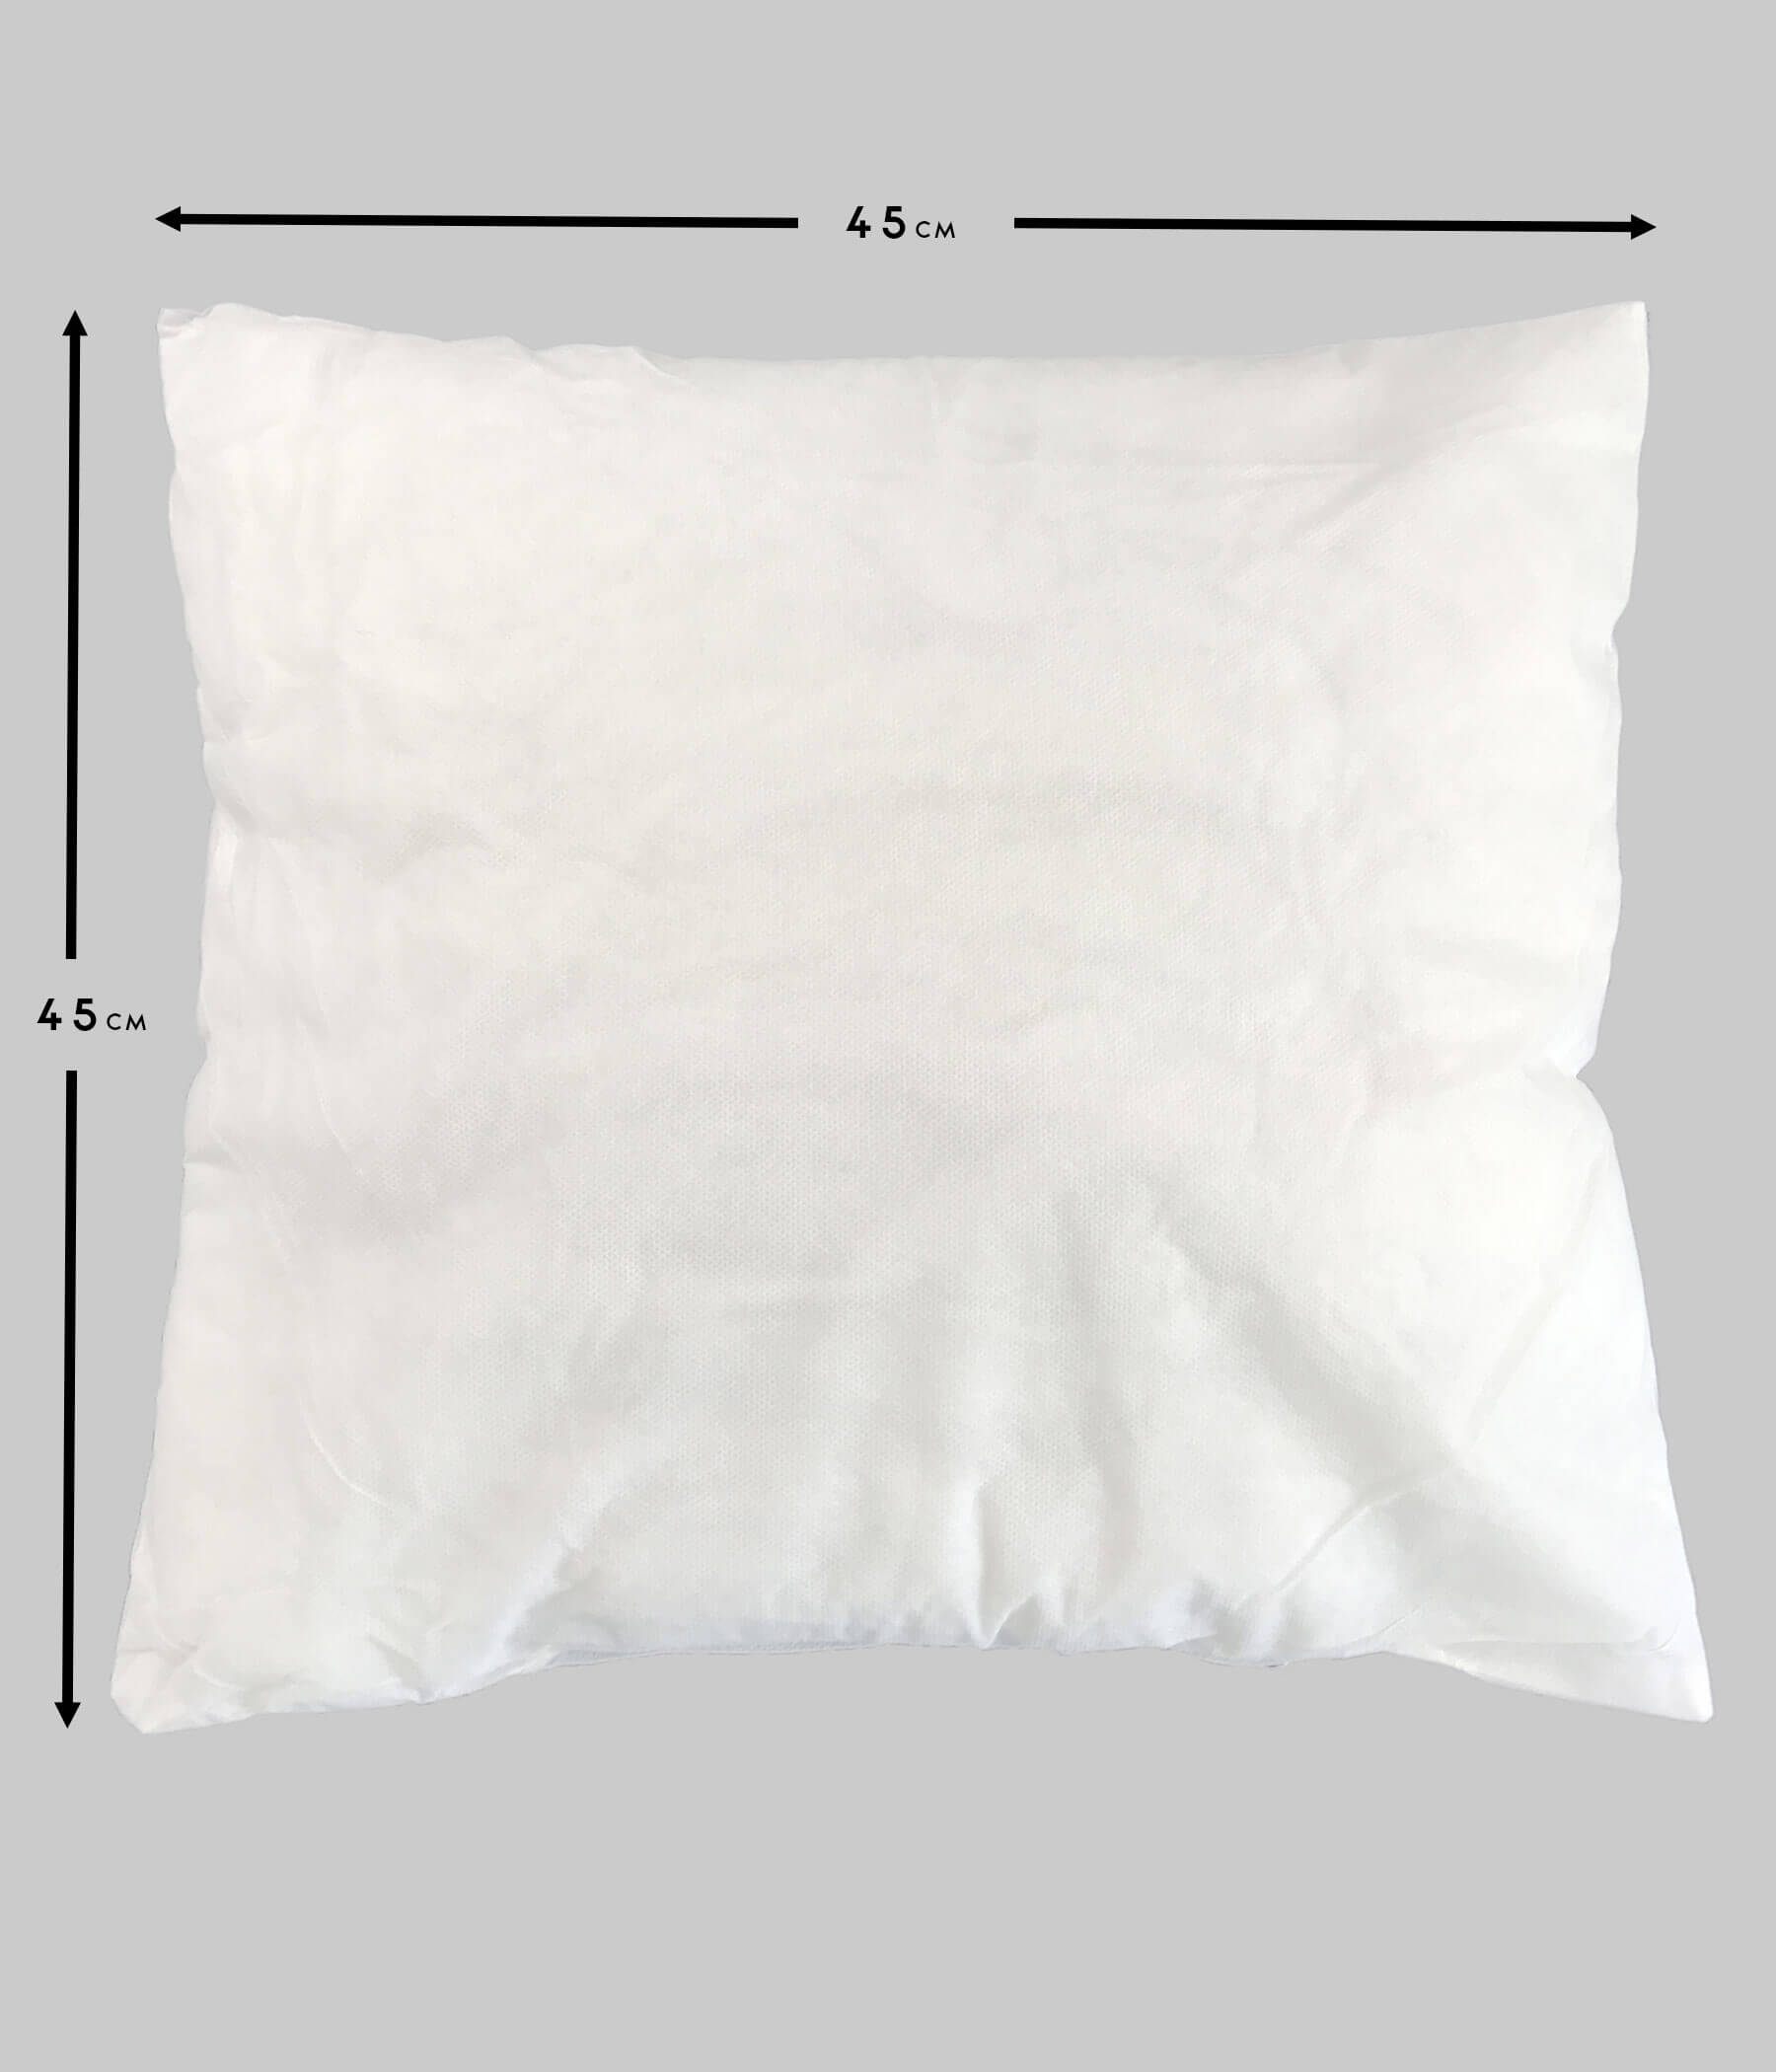 Buy Aus Made 45 x 45cm Cushion Insert Polyester Premium Lofty Fibre Online   Matt Blatt. Invest in Australian made quality with these cushion inserts.  Made from premium polyester fibre filling, these